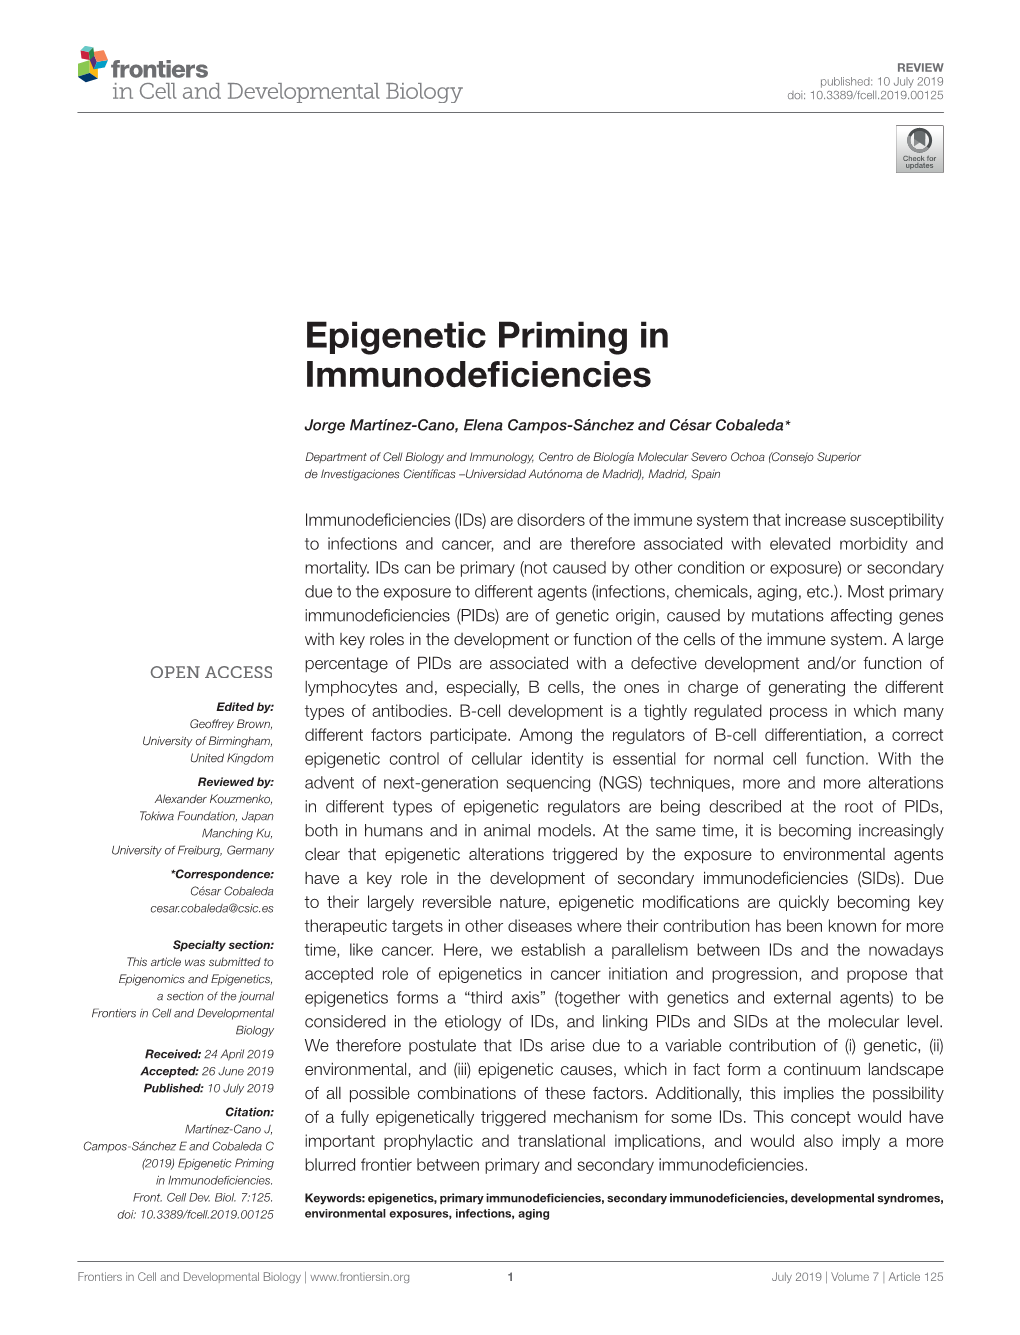 Epigenetic Priming in Immunodeficiencies